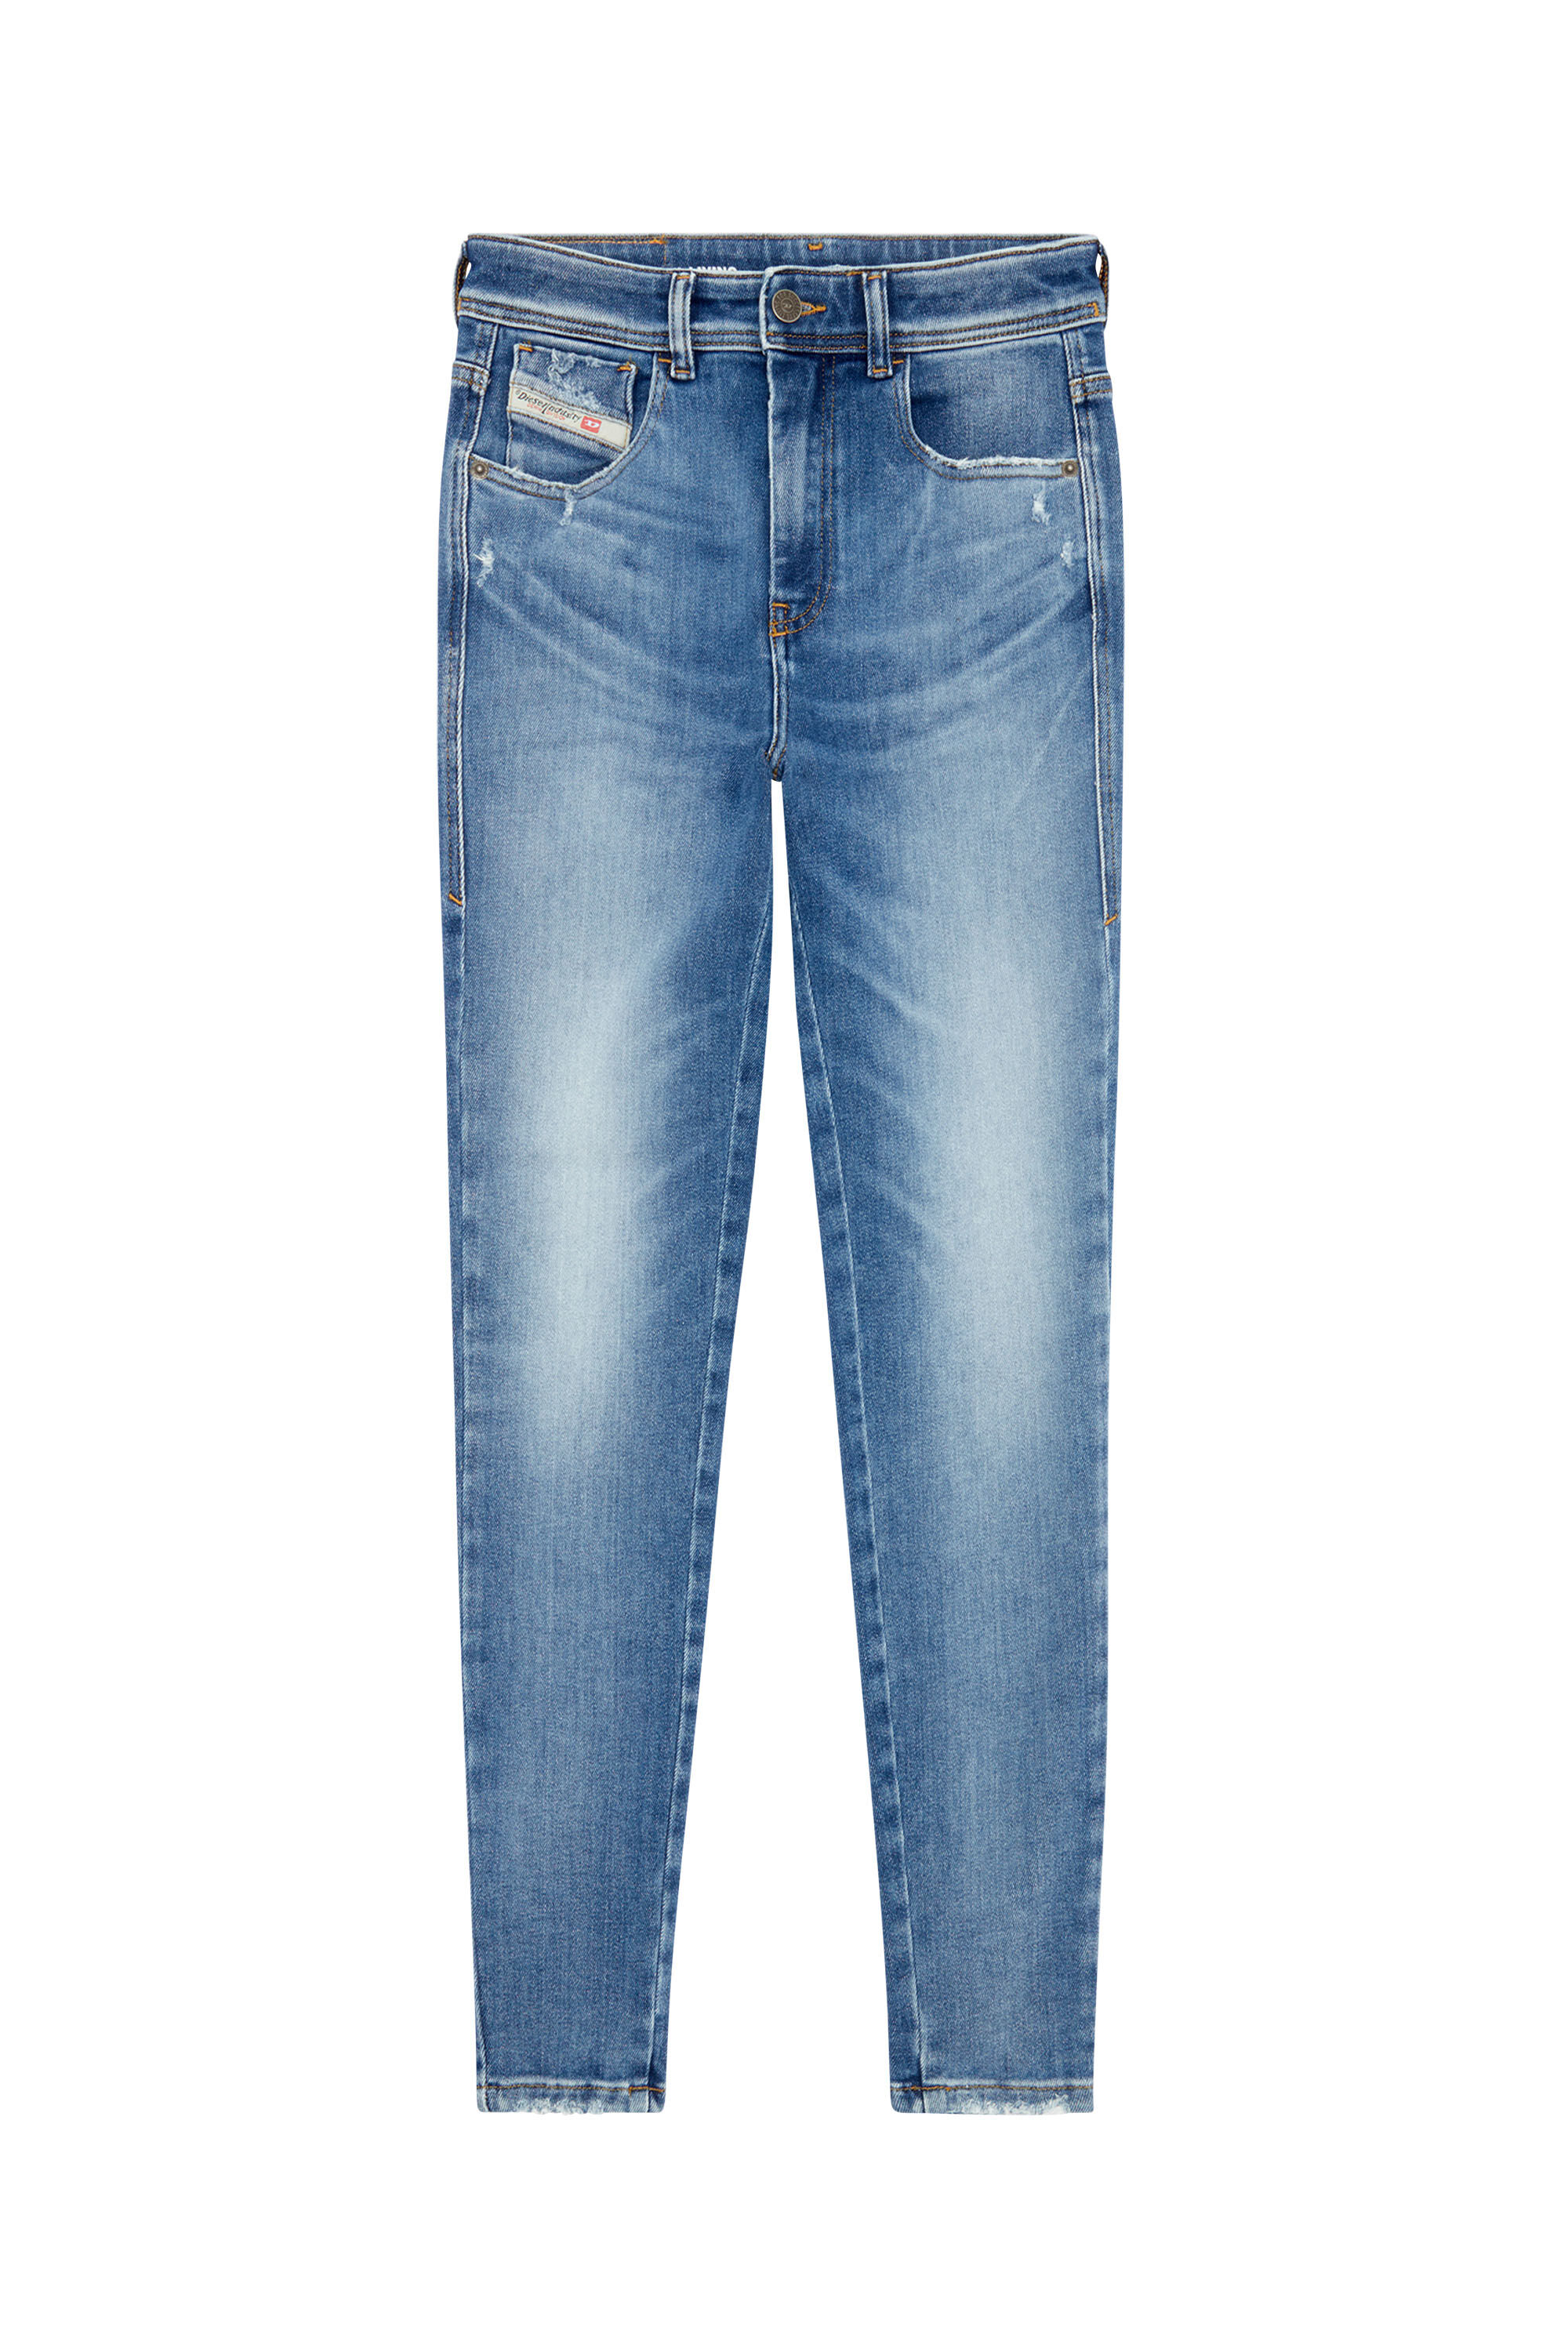 Women's Super skinny Jeans | Medium blue | Diesel 1984 Slandy-High